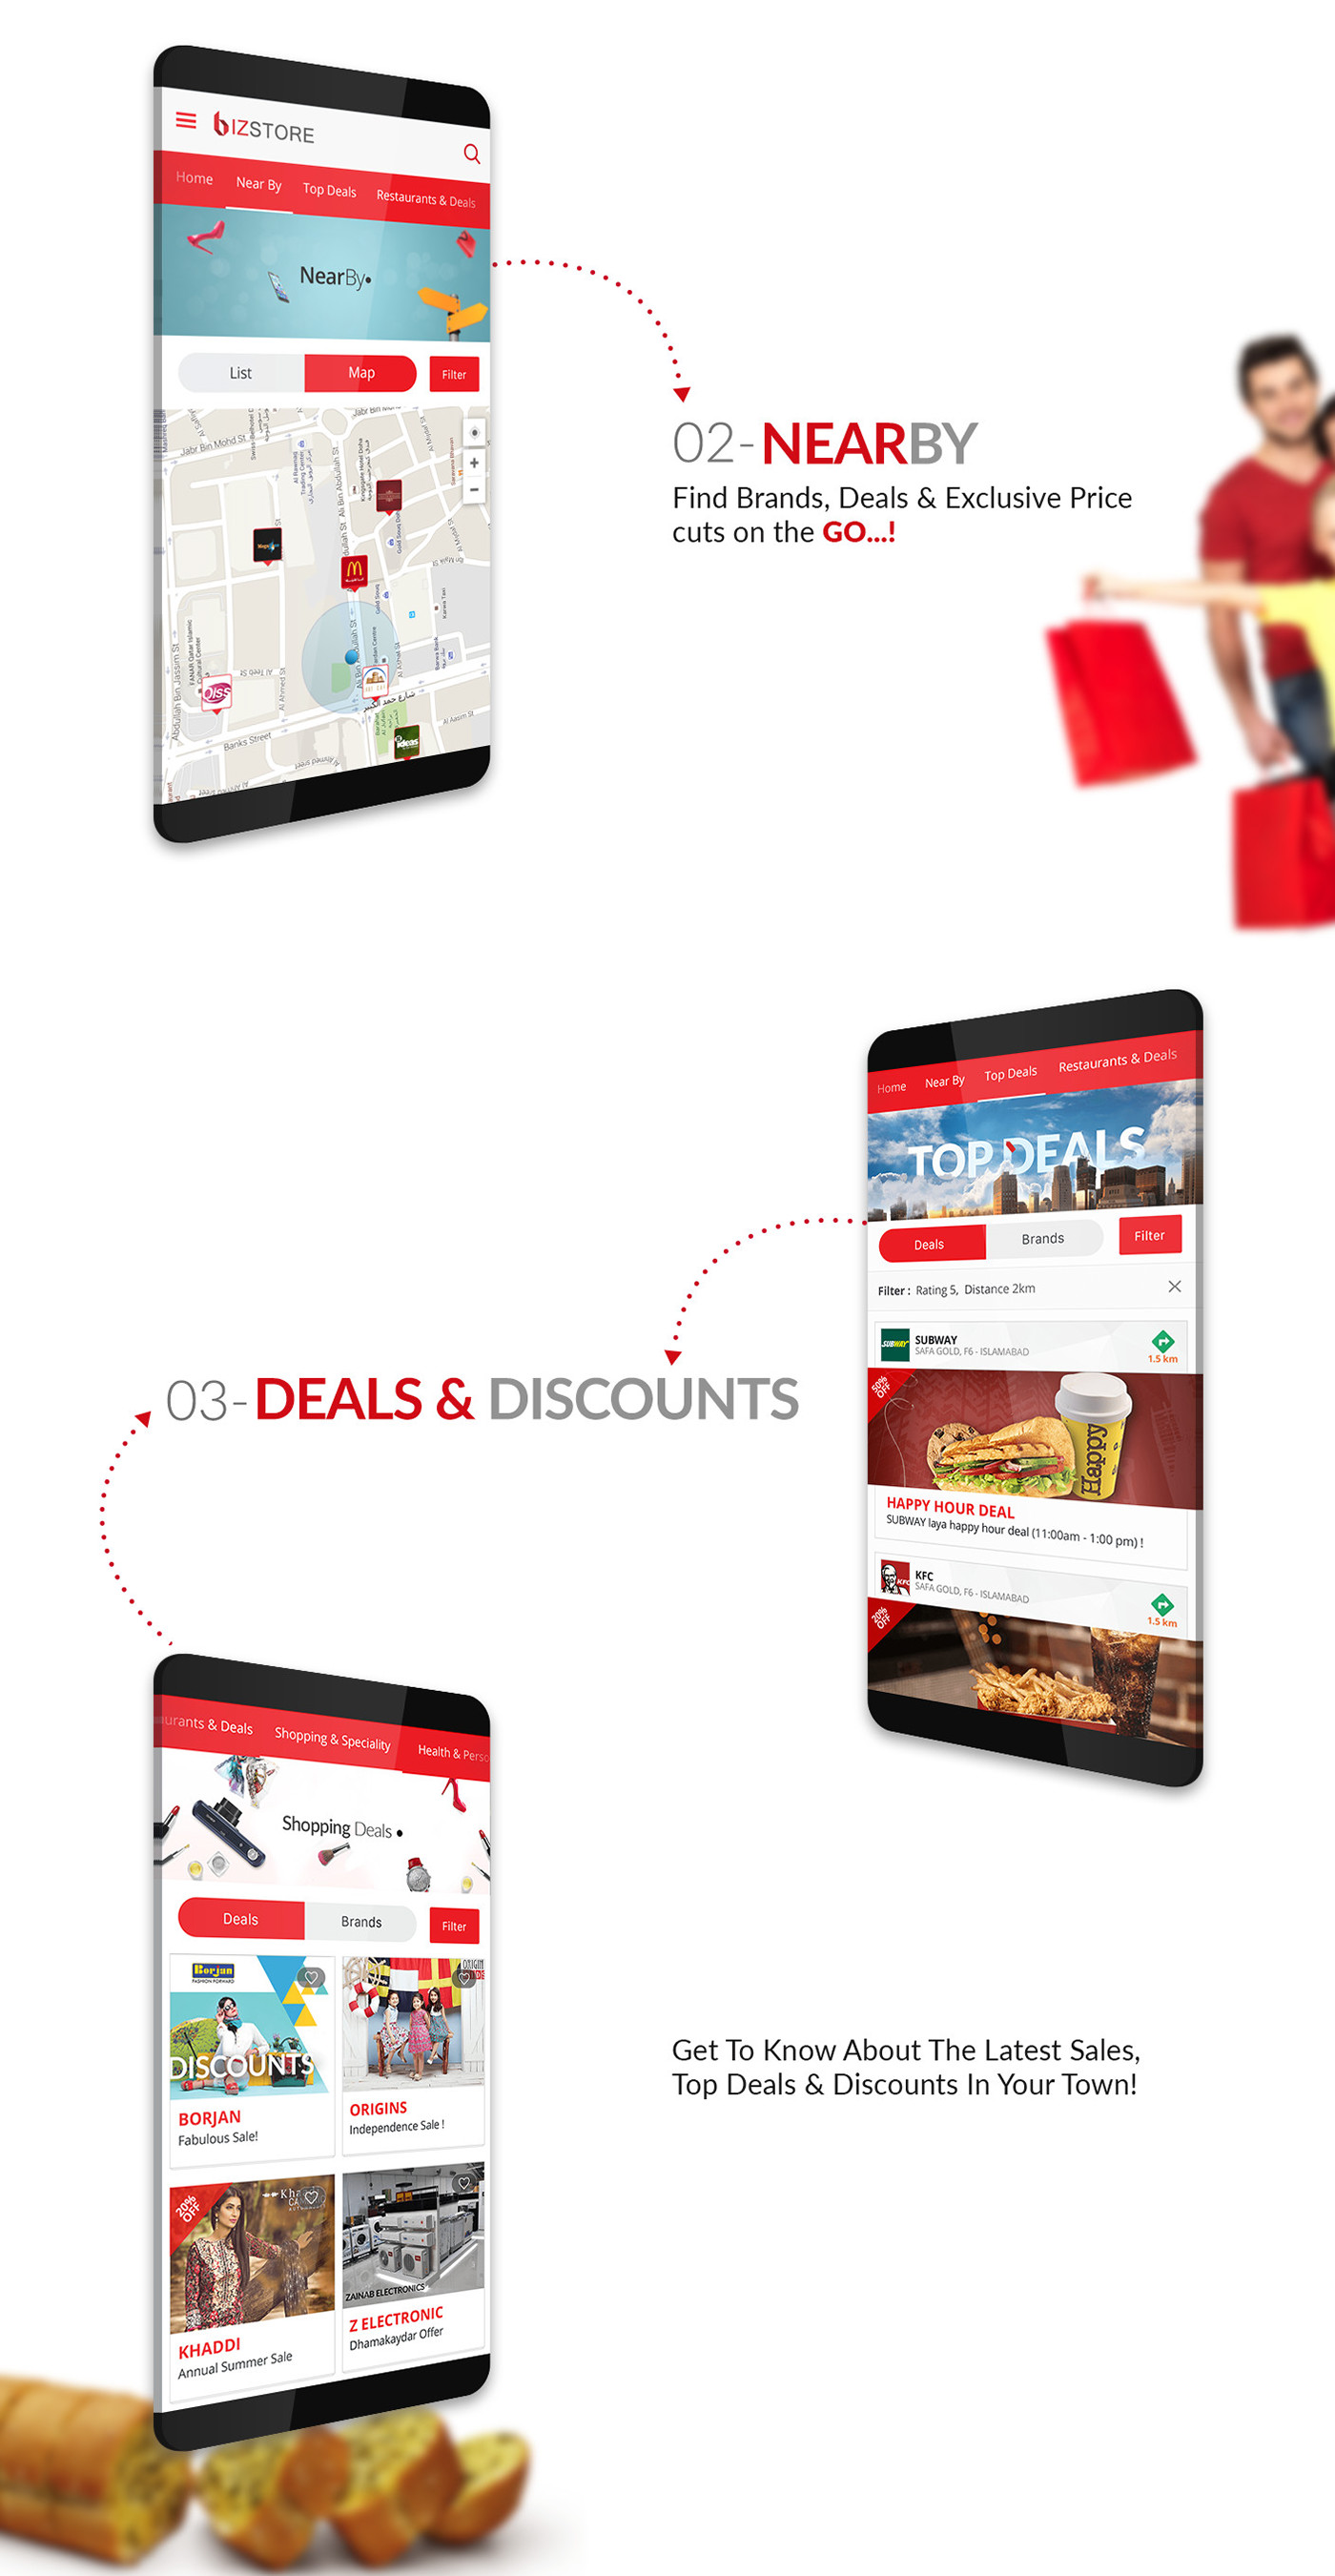 Bizstore mobile iphone application Shopping business Deals discounts red Pakistan Qatar dubai Food  brands Shops